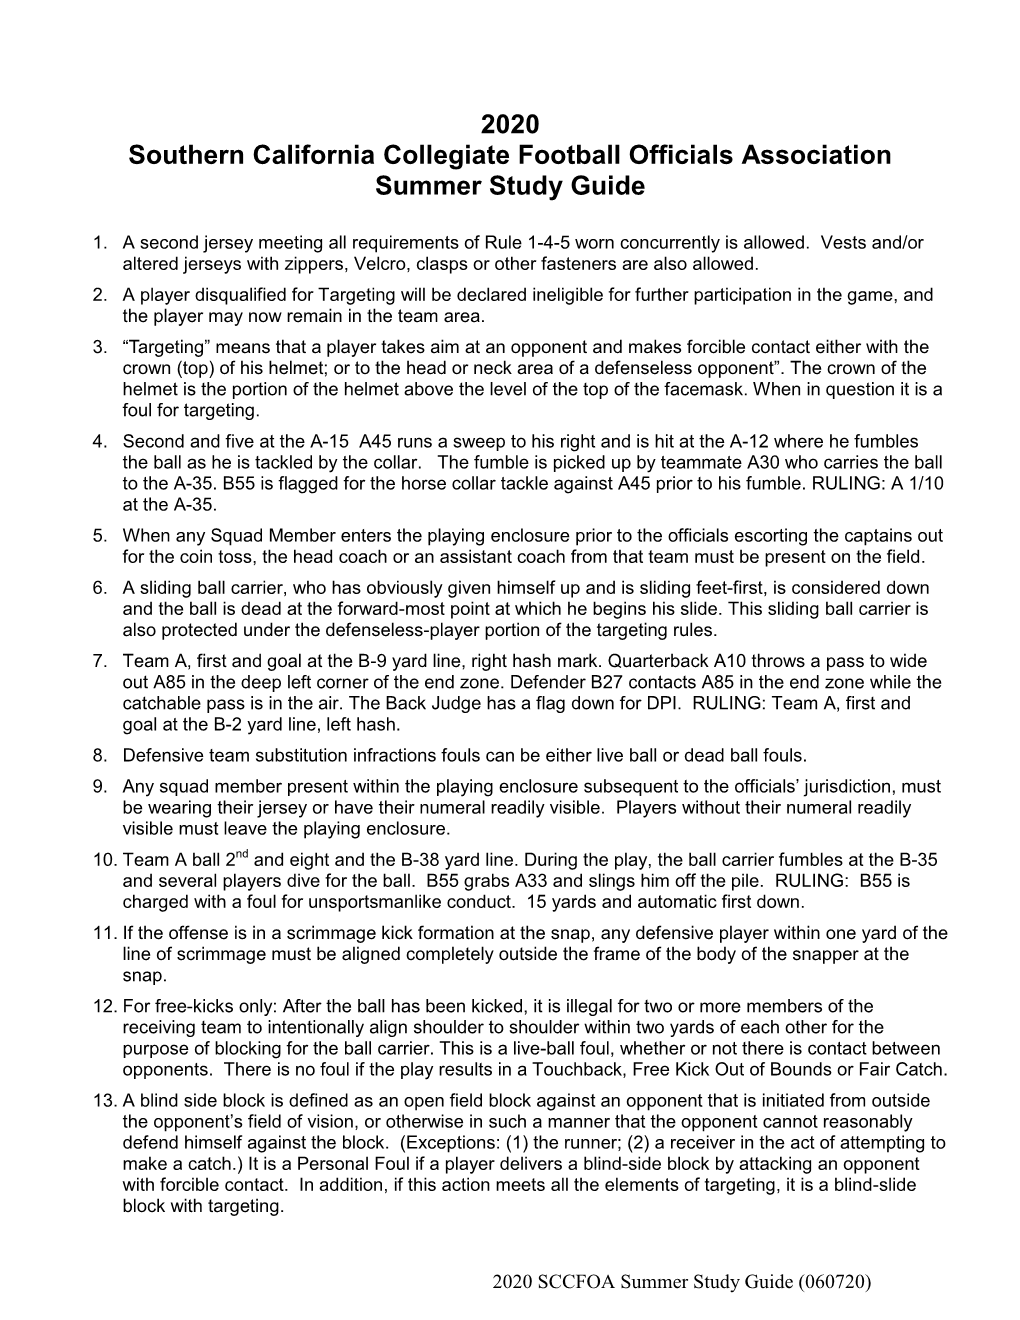 2020 Southern California Collegiate Football Officials Association Summer Study Guide